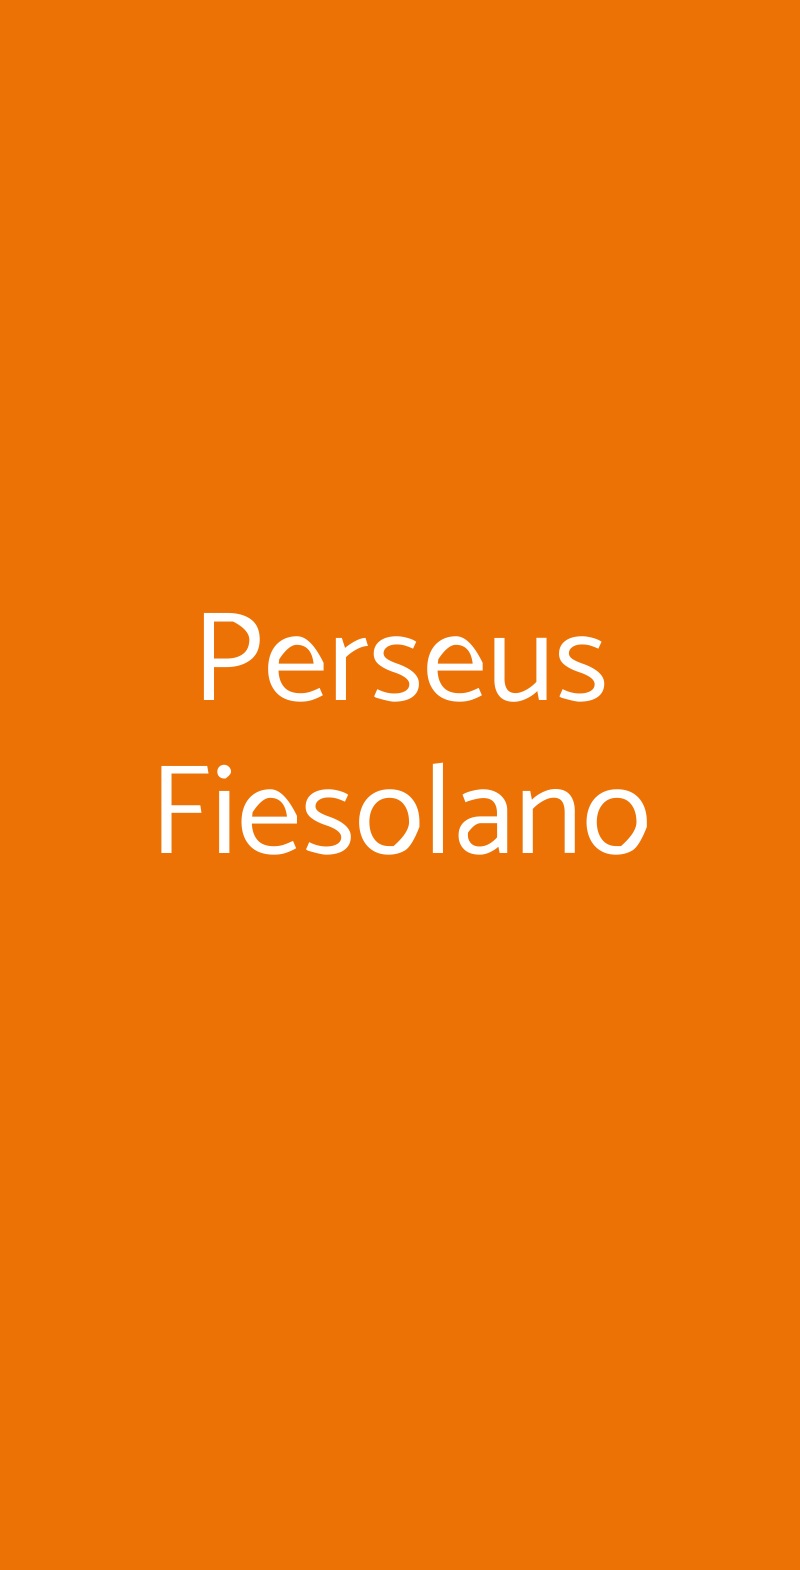 Perseus Fiesolano Fiesole menù 1 pagina